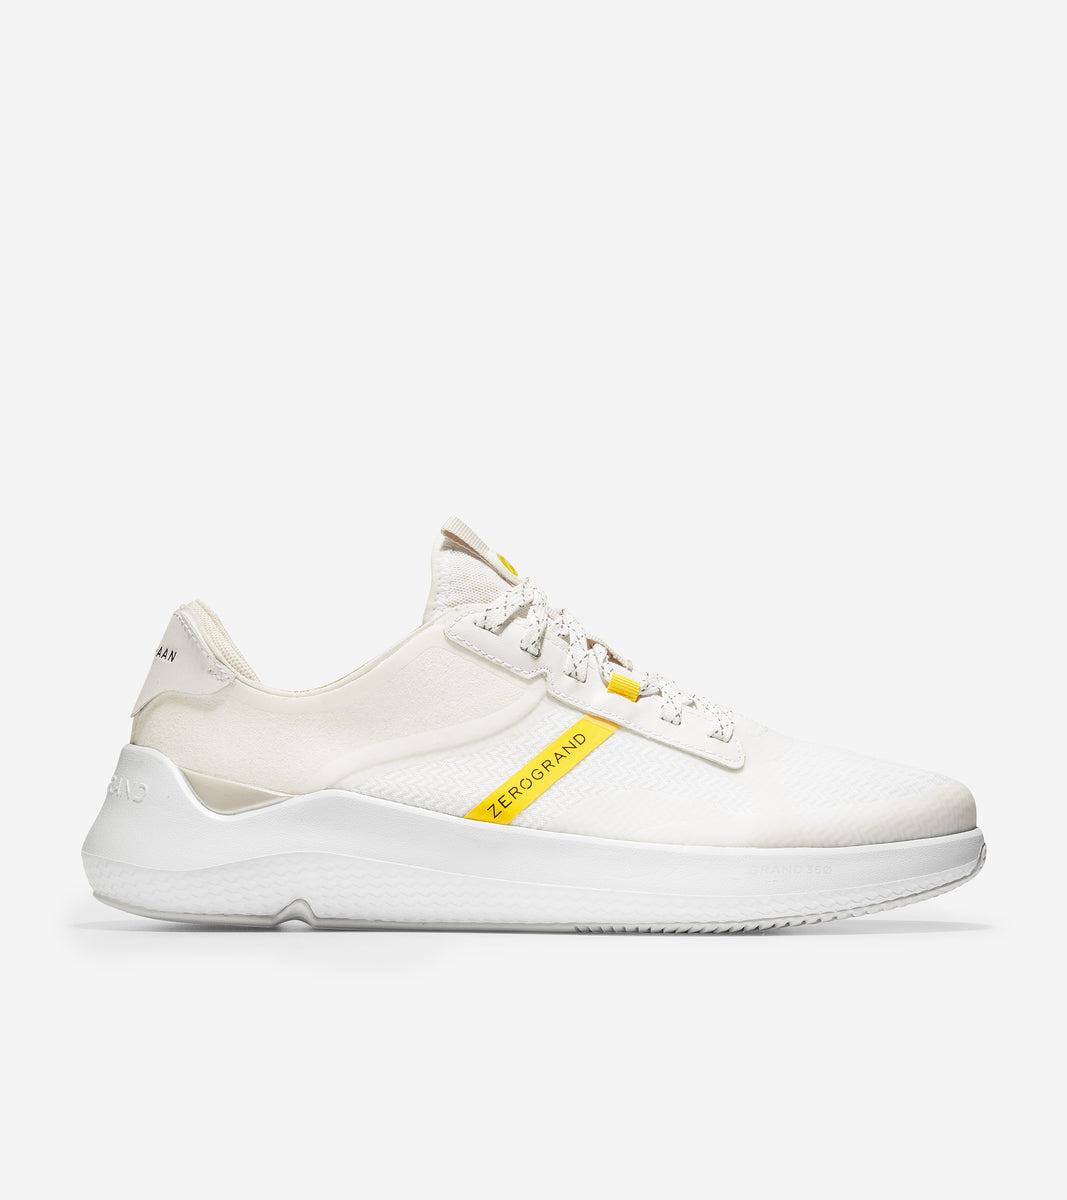 ColeHaan-Zerøgrand Winner Tennis Sneaker-c34008-White/Nimbus Cloud/Cyber Yellow/Optic White